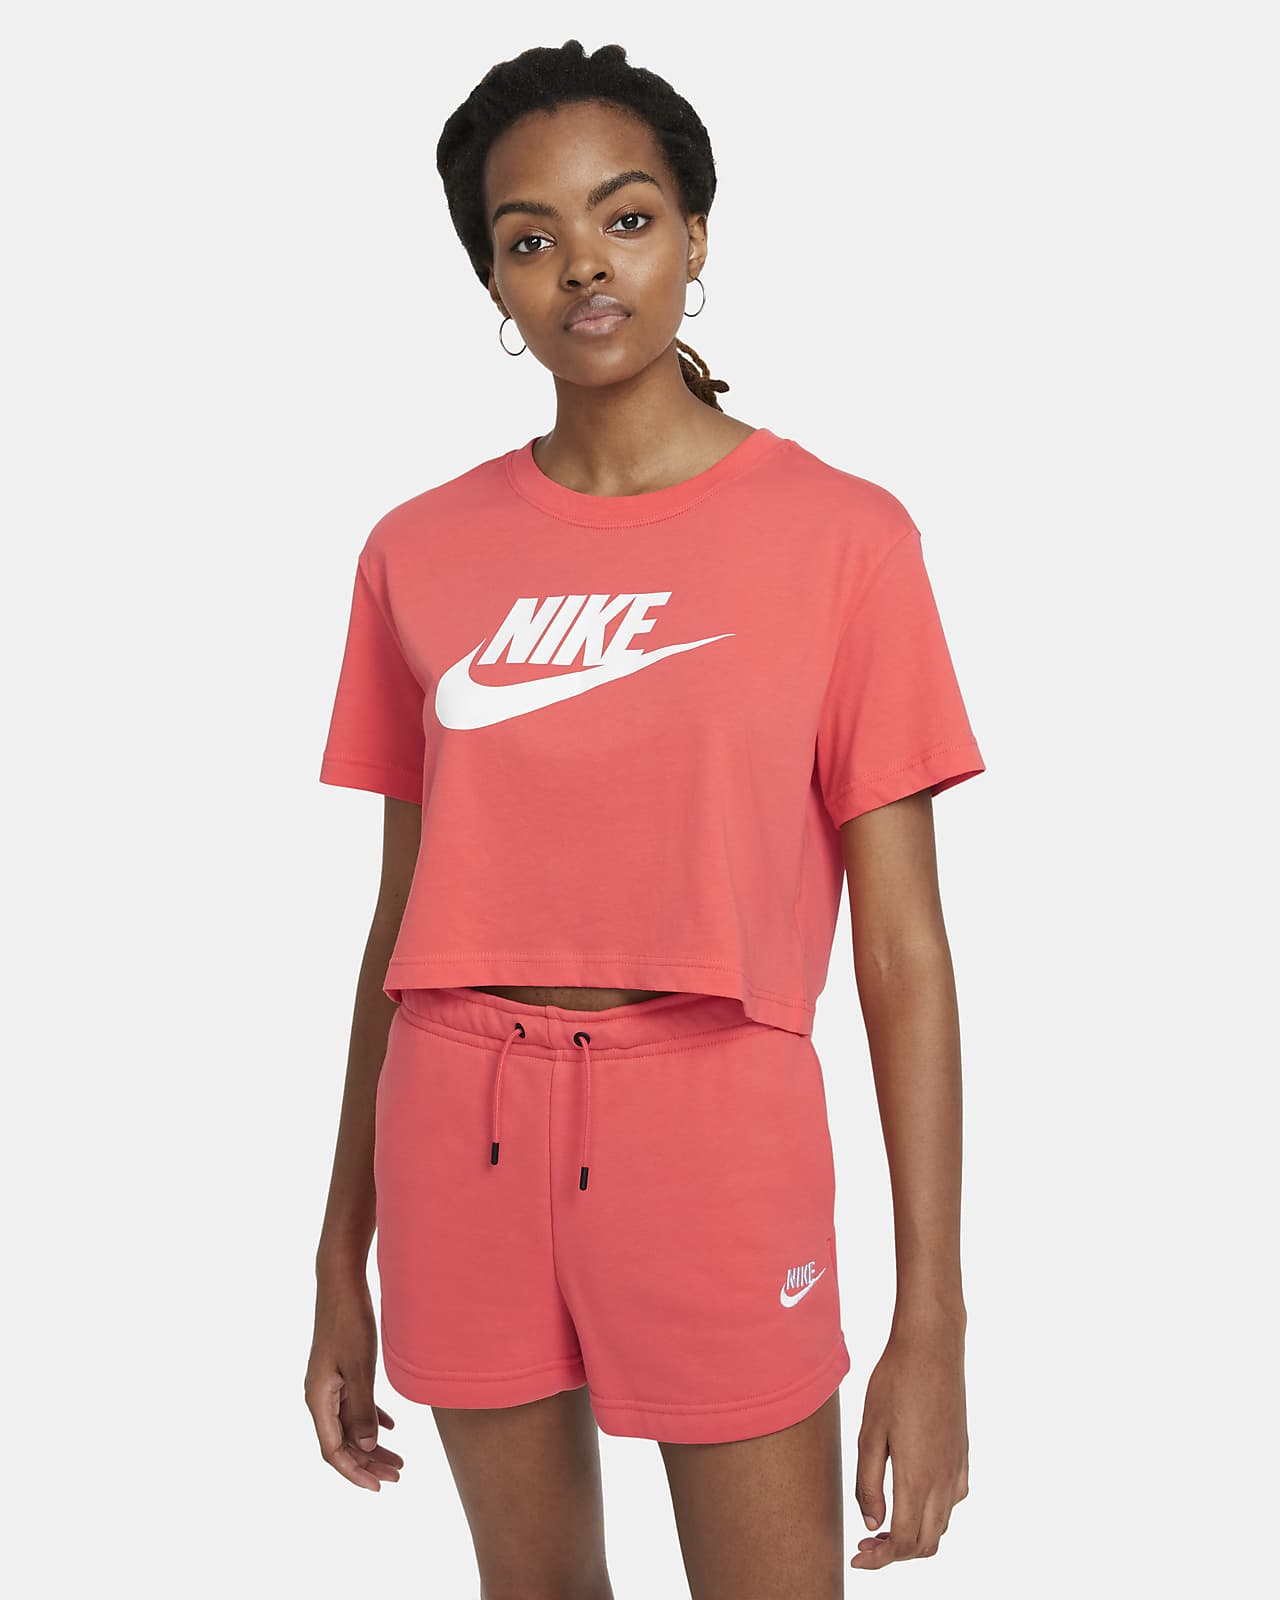 Calção Nike Sportswear Essential Crop Top para mulher - BV6175-814 -  Laranja salmão